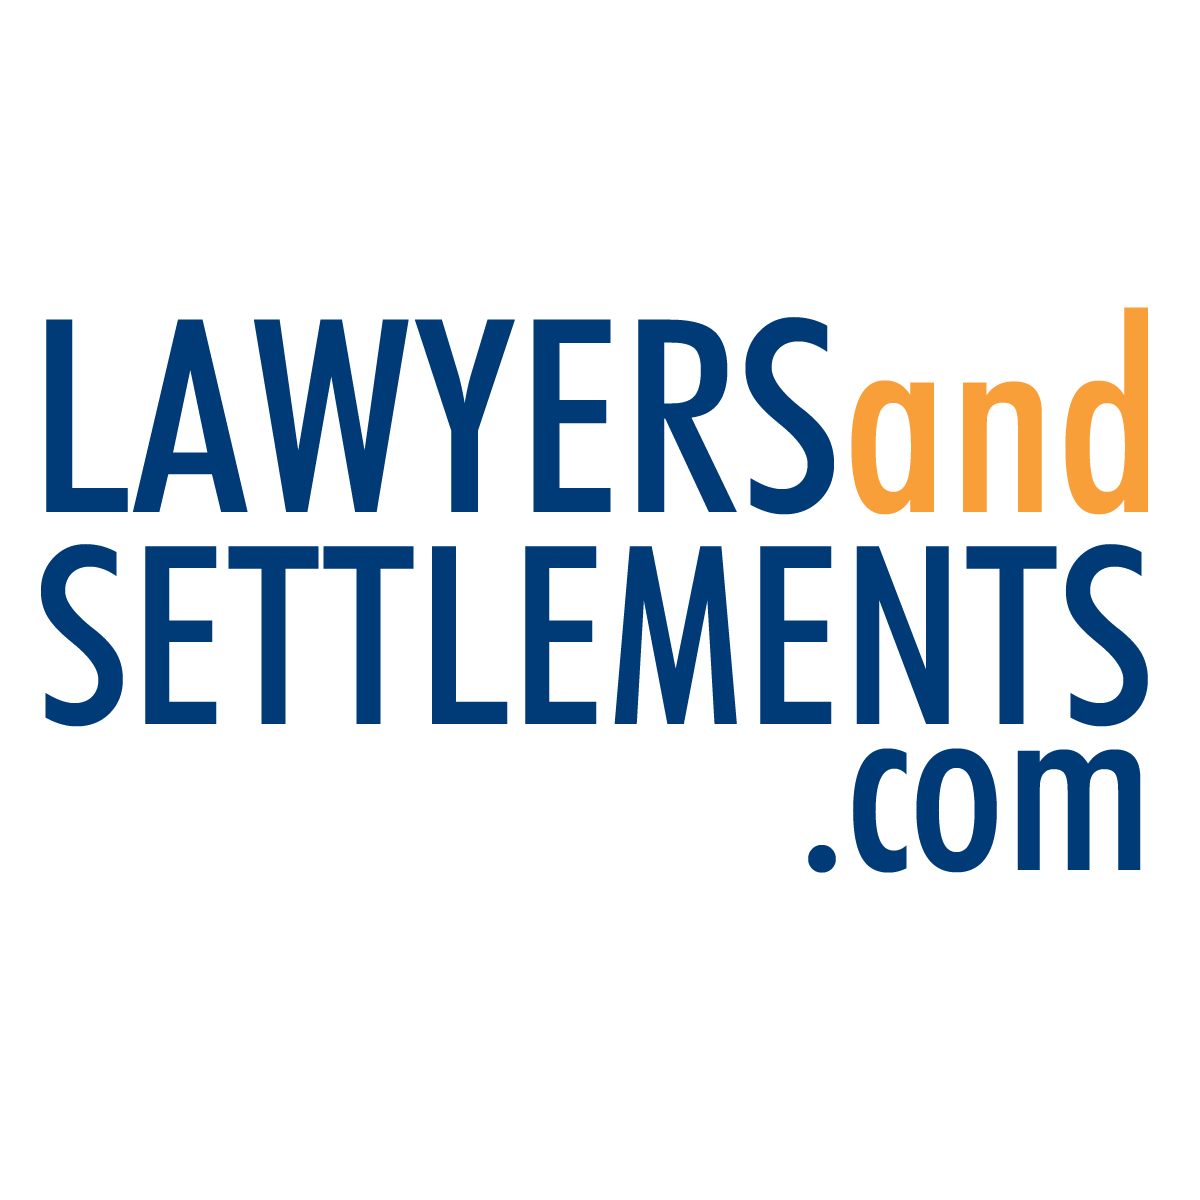 (c) Lawyersandsettlements.com